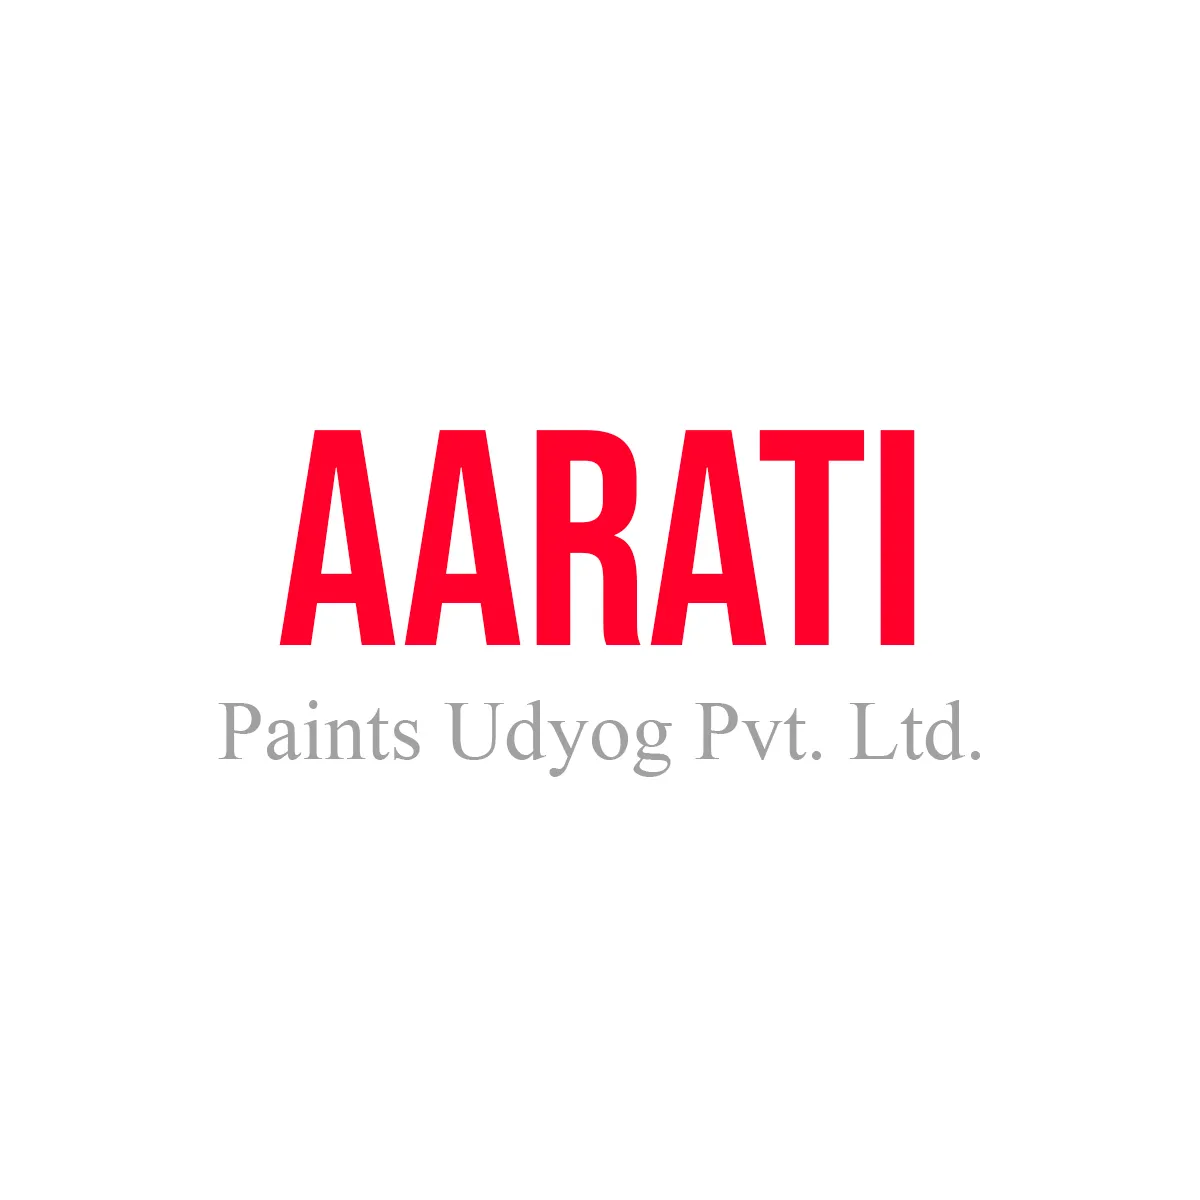 Aarati Paints Udyog Pvt. Ltd.